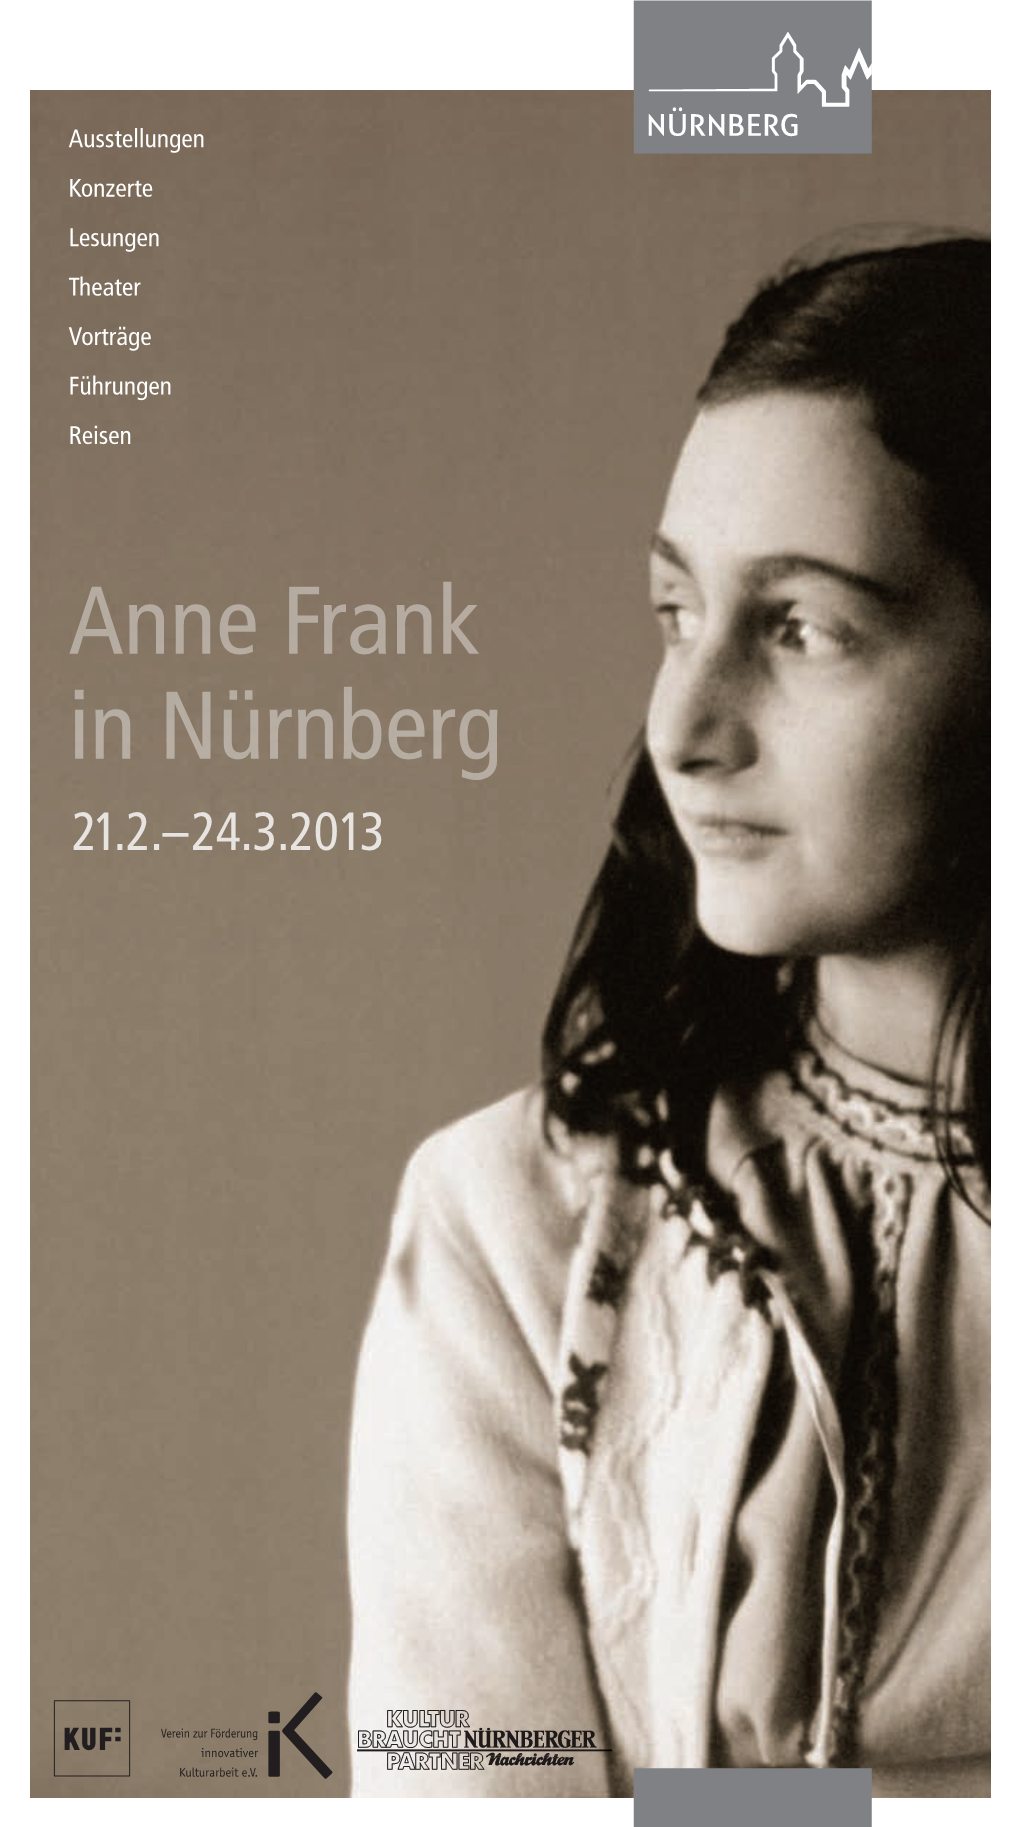 Anne Frank in Nuernberg